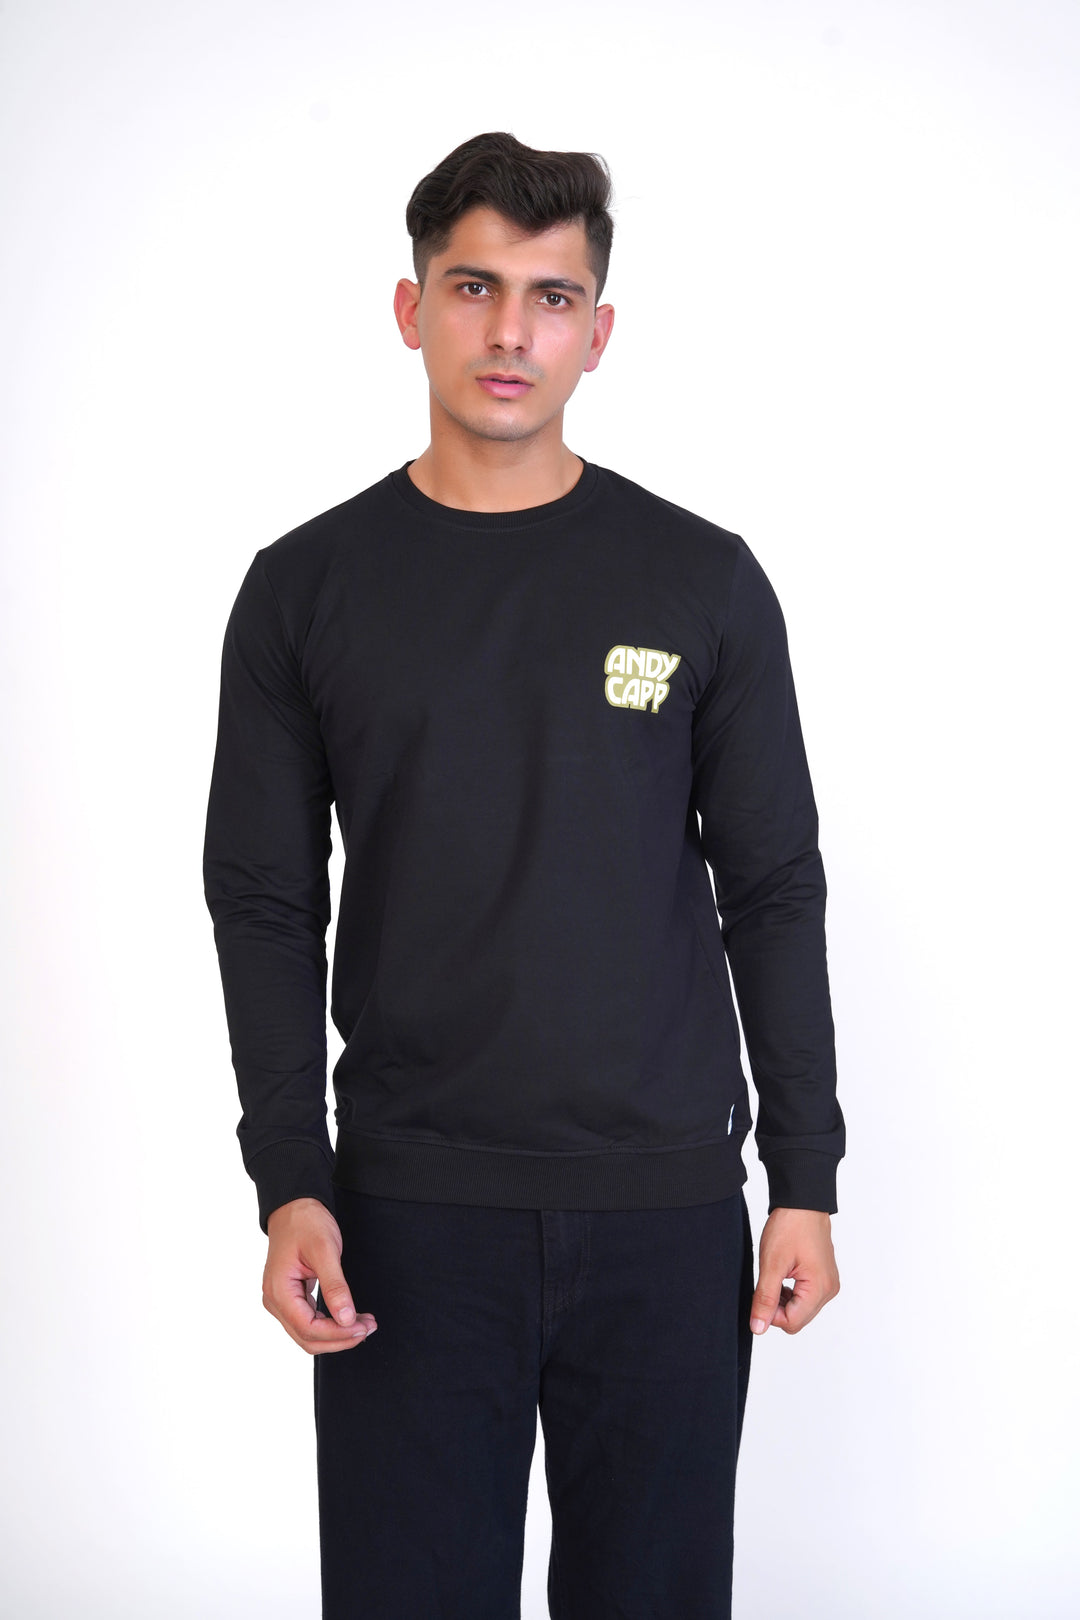 Andy Capp Black Premium Organic Cotton Sweatshirt - Royaltail